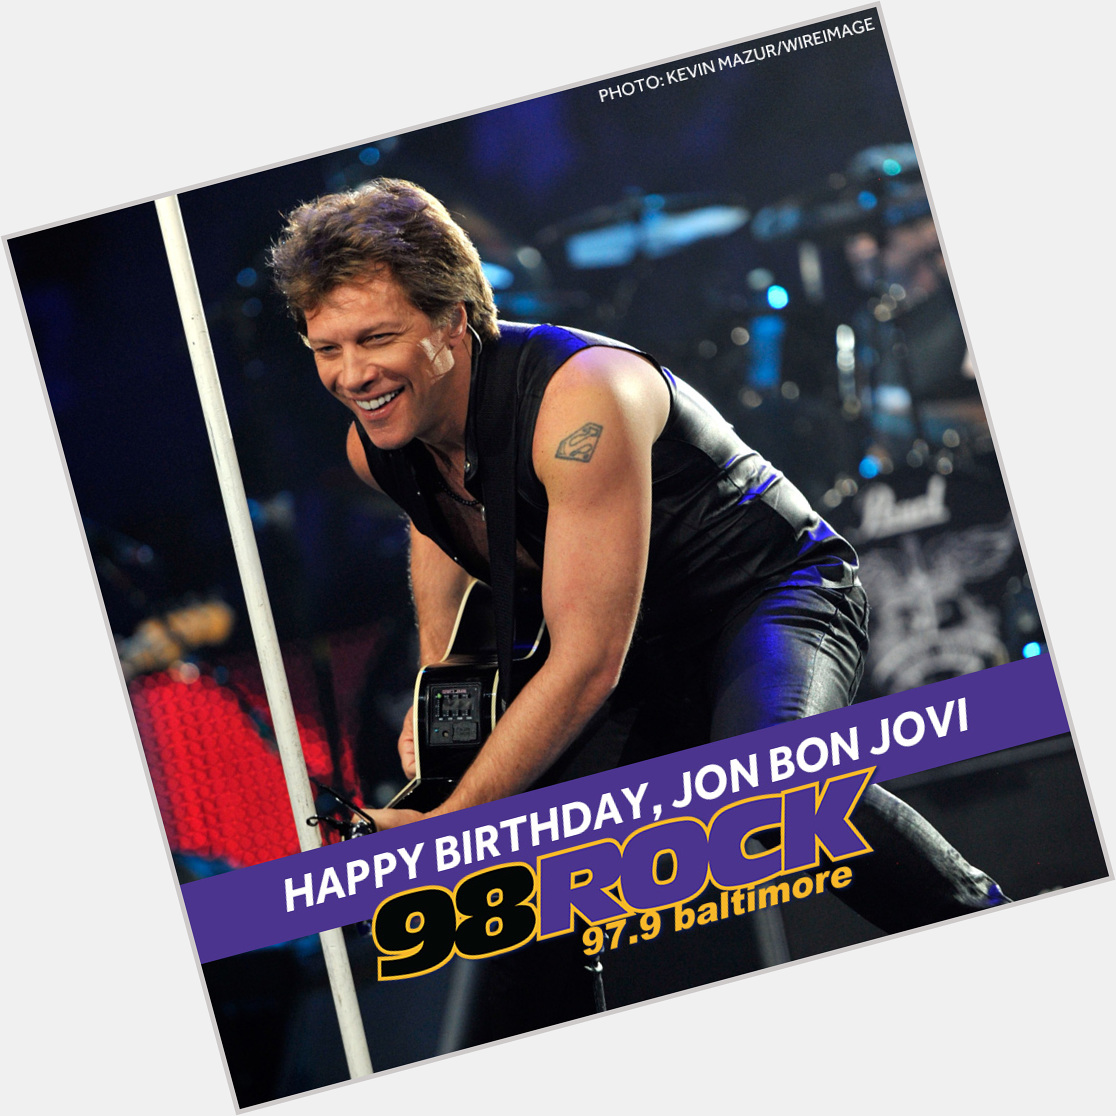 Happy Birthday to Jon Bon Jovi who turns 59 today.     